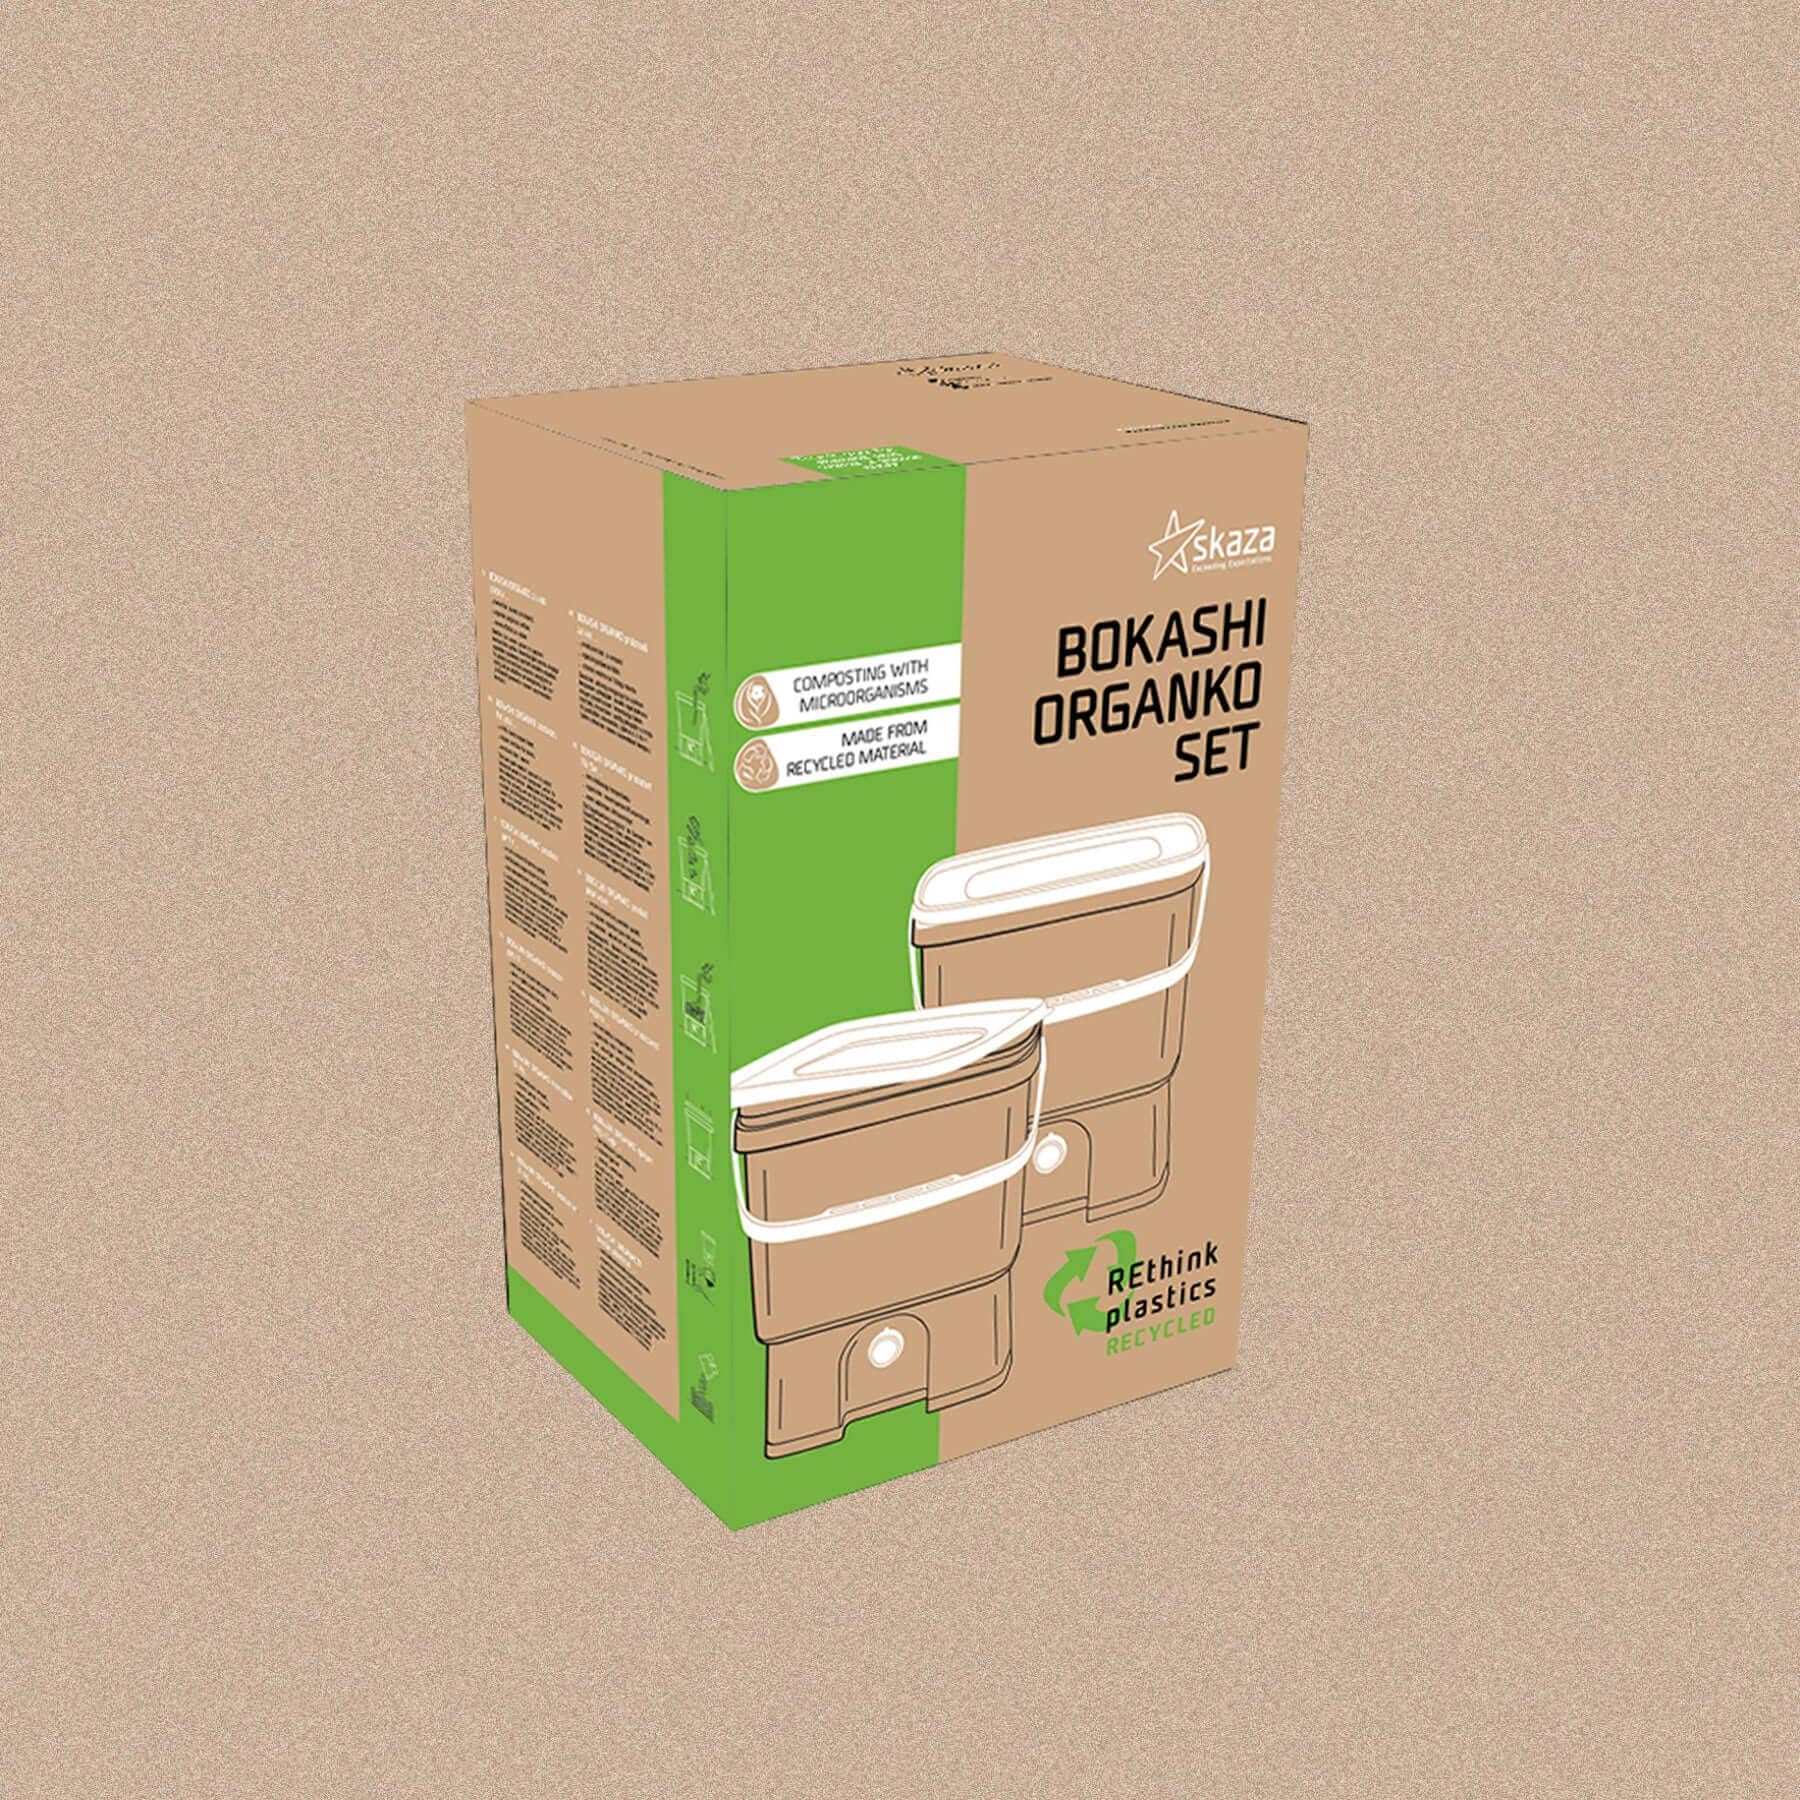 Bokashi Organko 1 komposter cappuccino / valge komplekt 2 x 16 L - Koduwärk